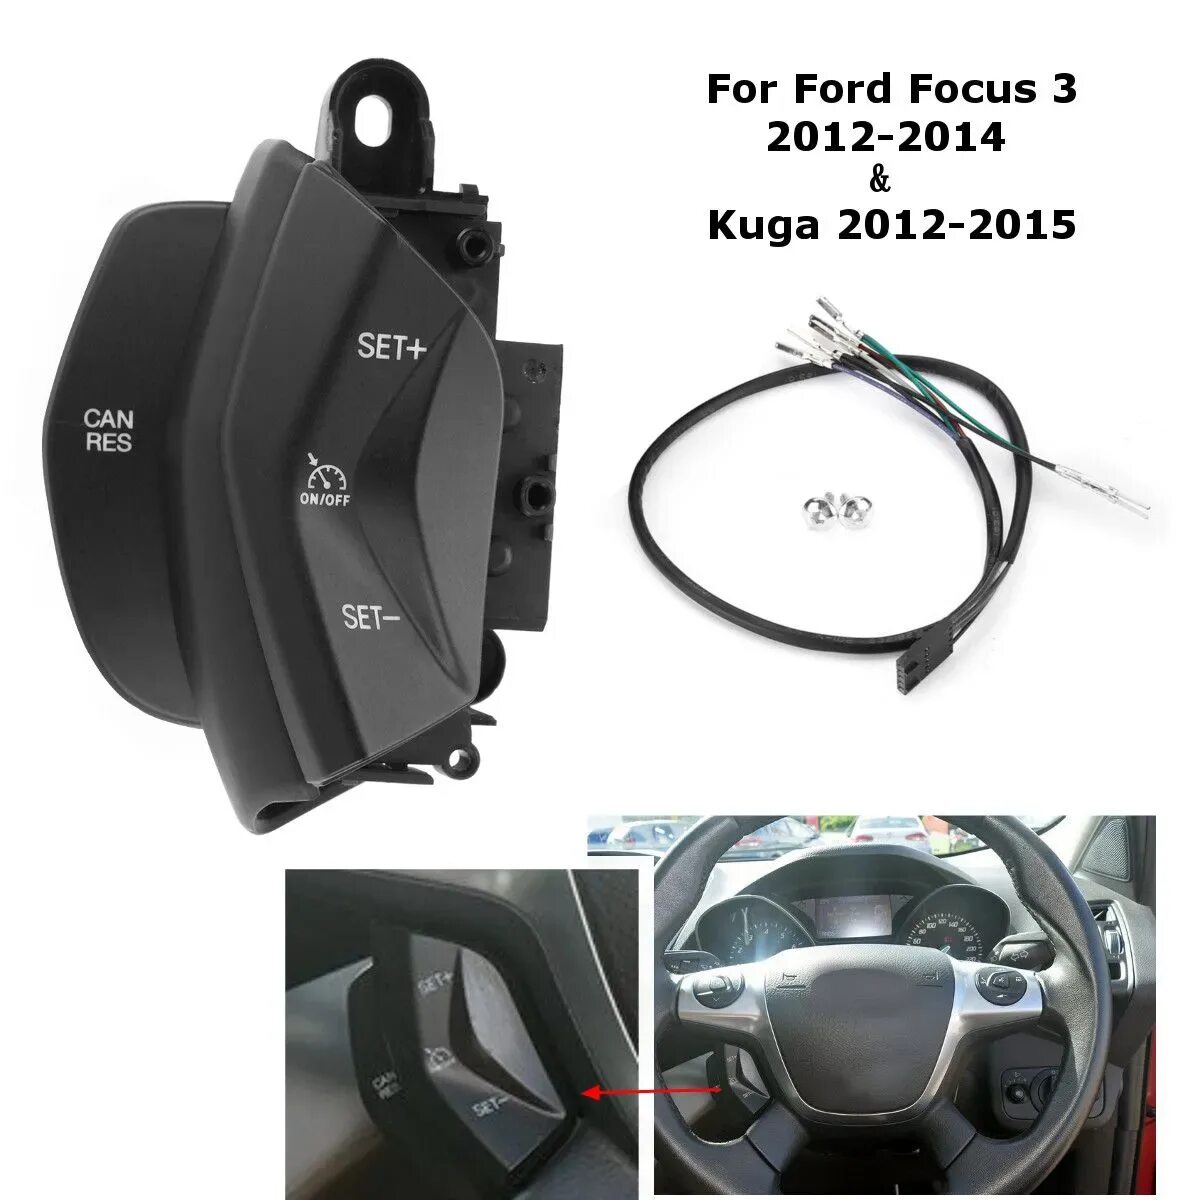 Круз контроля Ford Focus 2. Круиз контроль Ford Focus 3. Форд фокус 3 круиз контроль оригинал. Фокус переключатель круиз контроля.